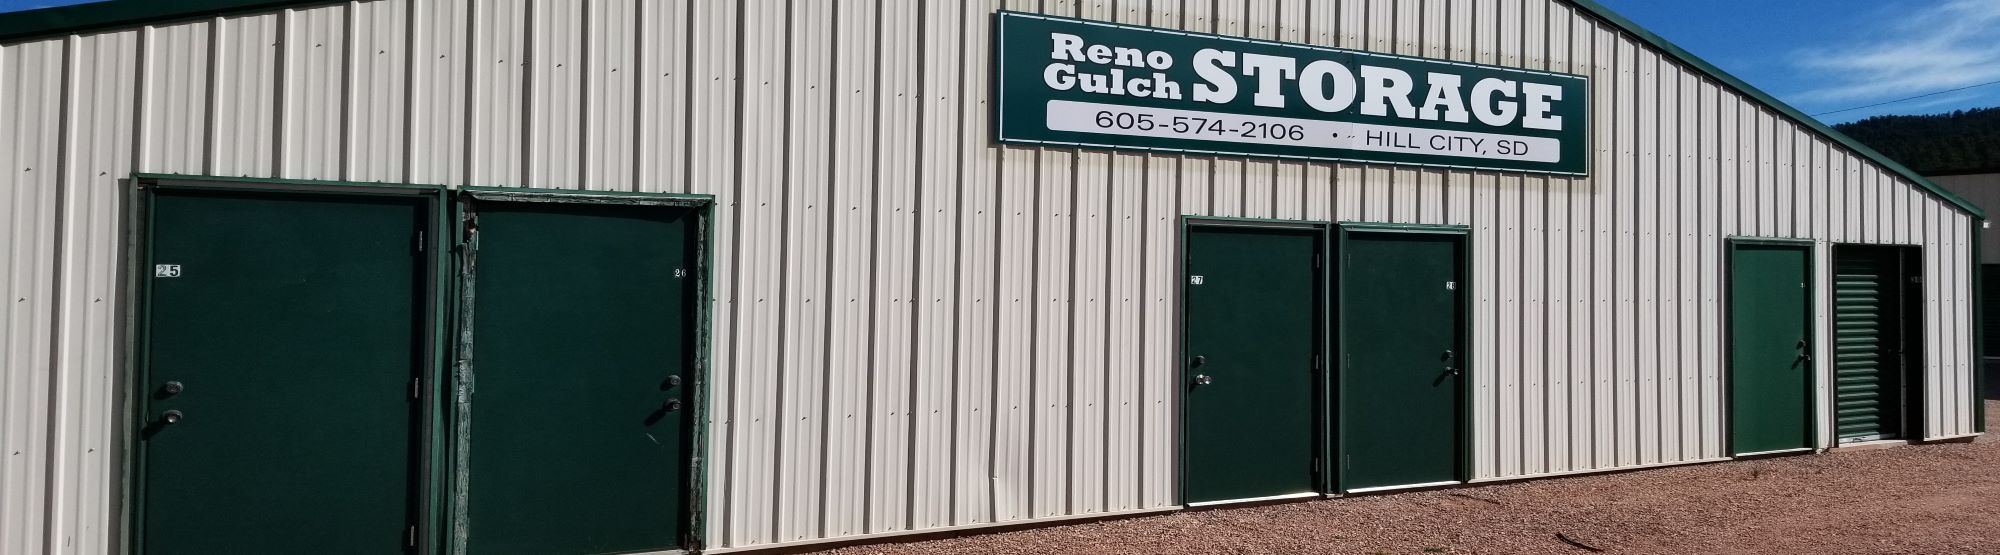 Reno Gulch Storage in Hill City, SD